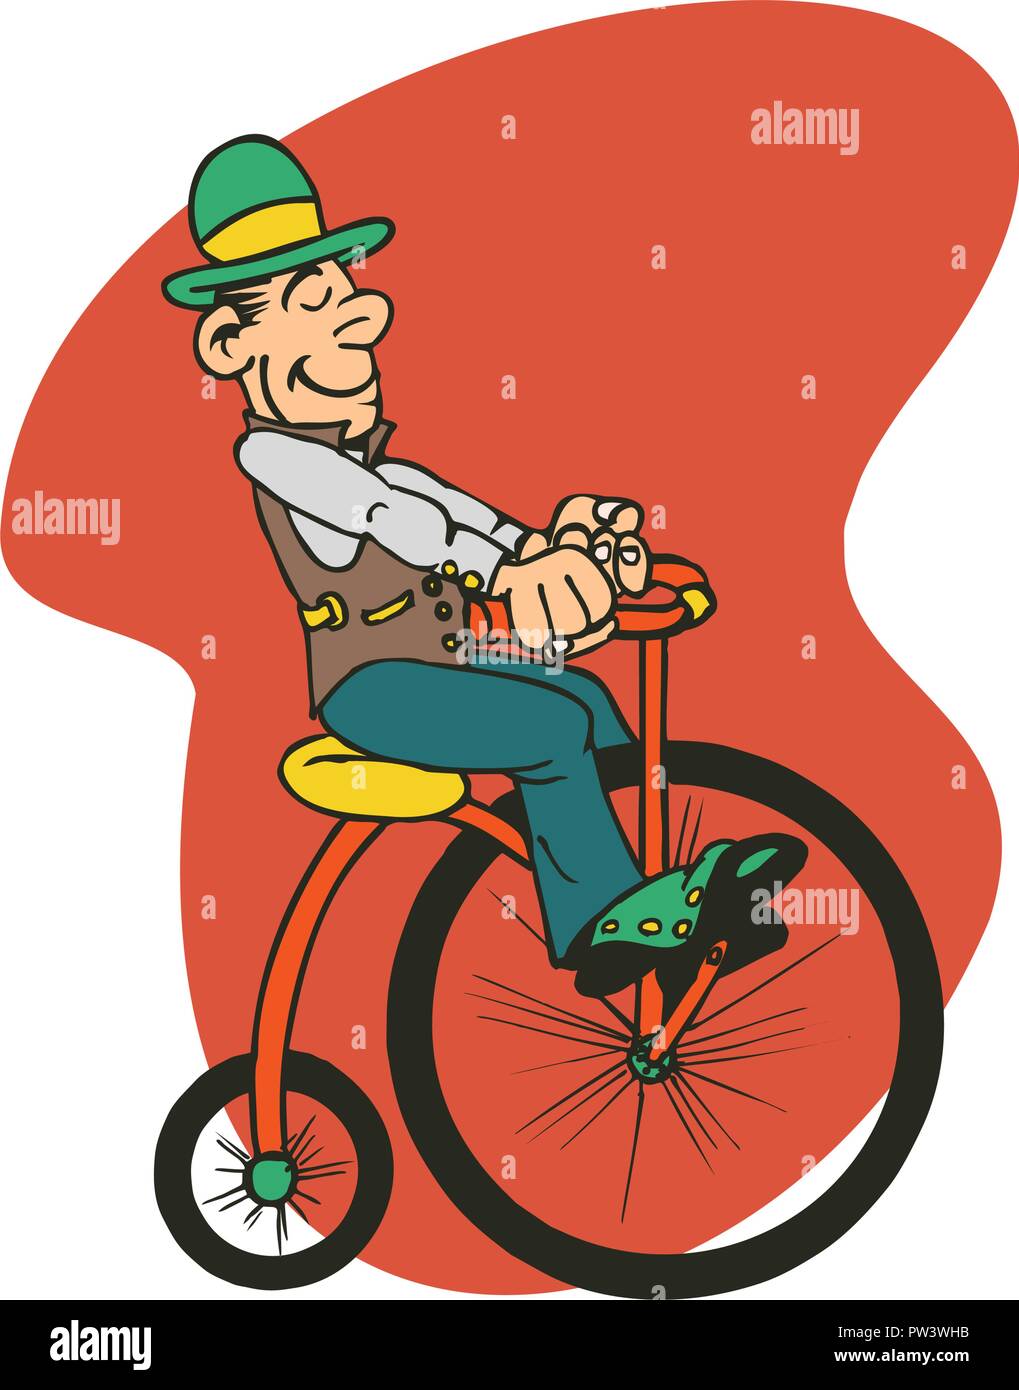 Seseorang Menaiki Sepeda Tua Kartun Stock Vector Image Art Alamy